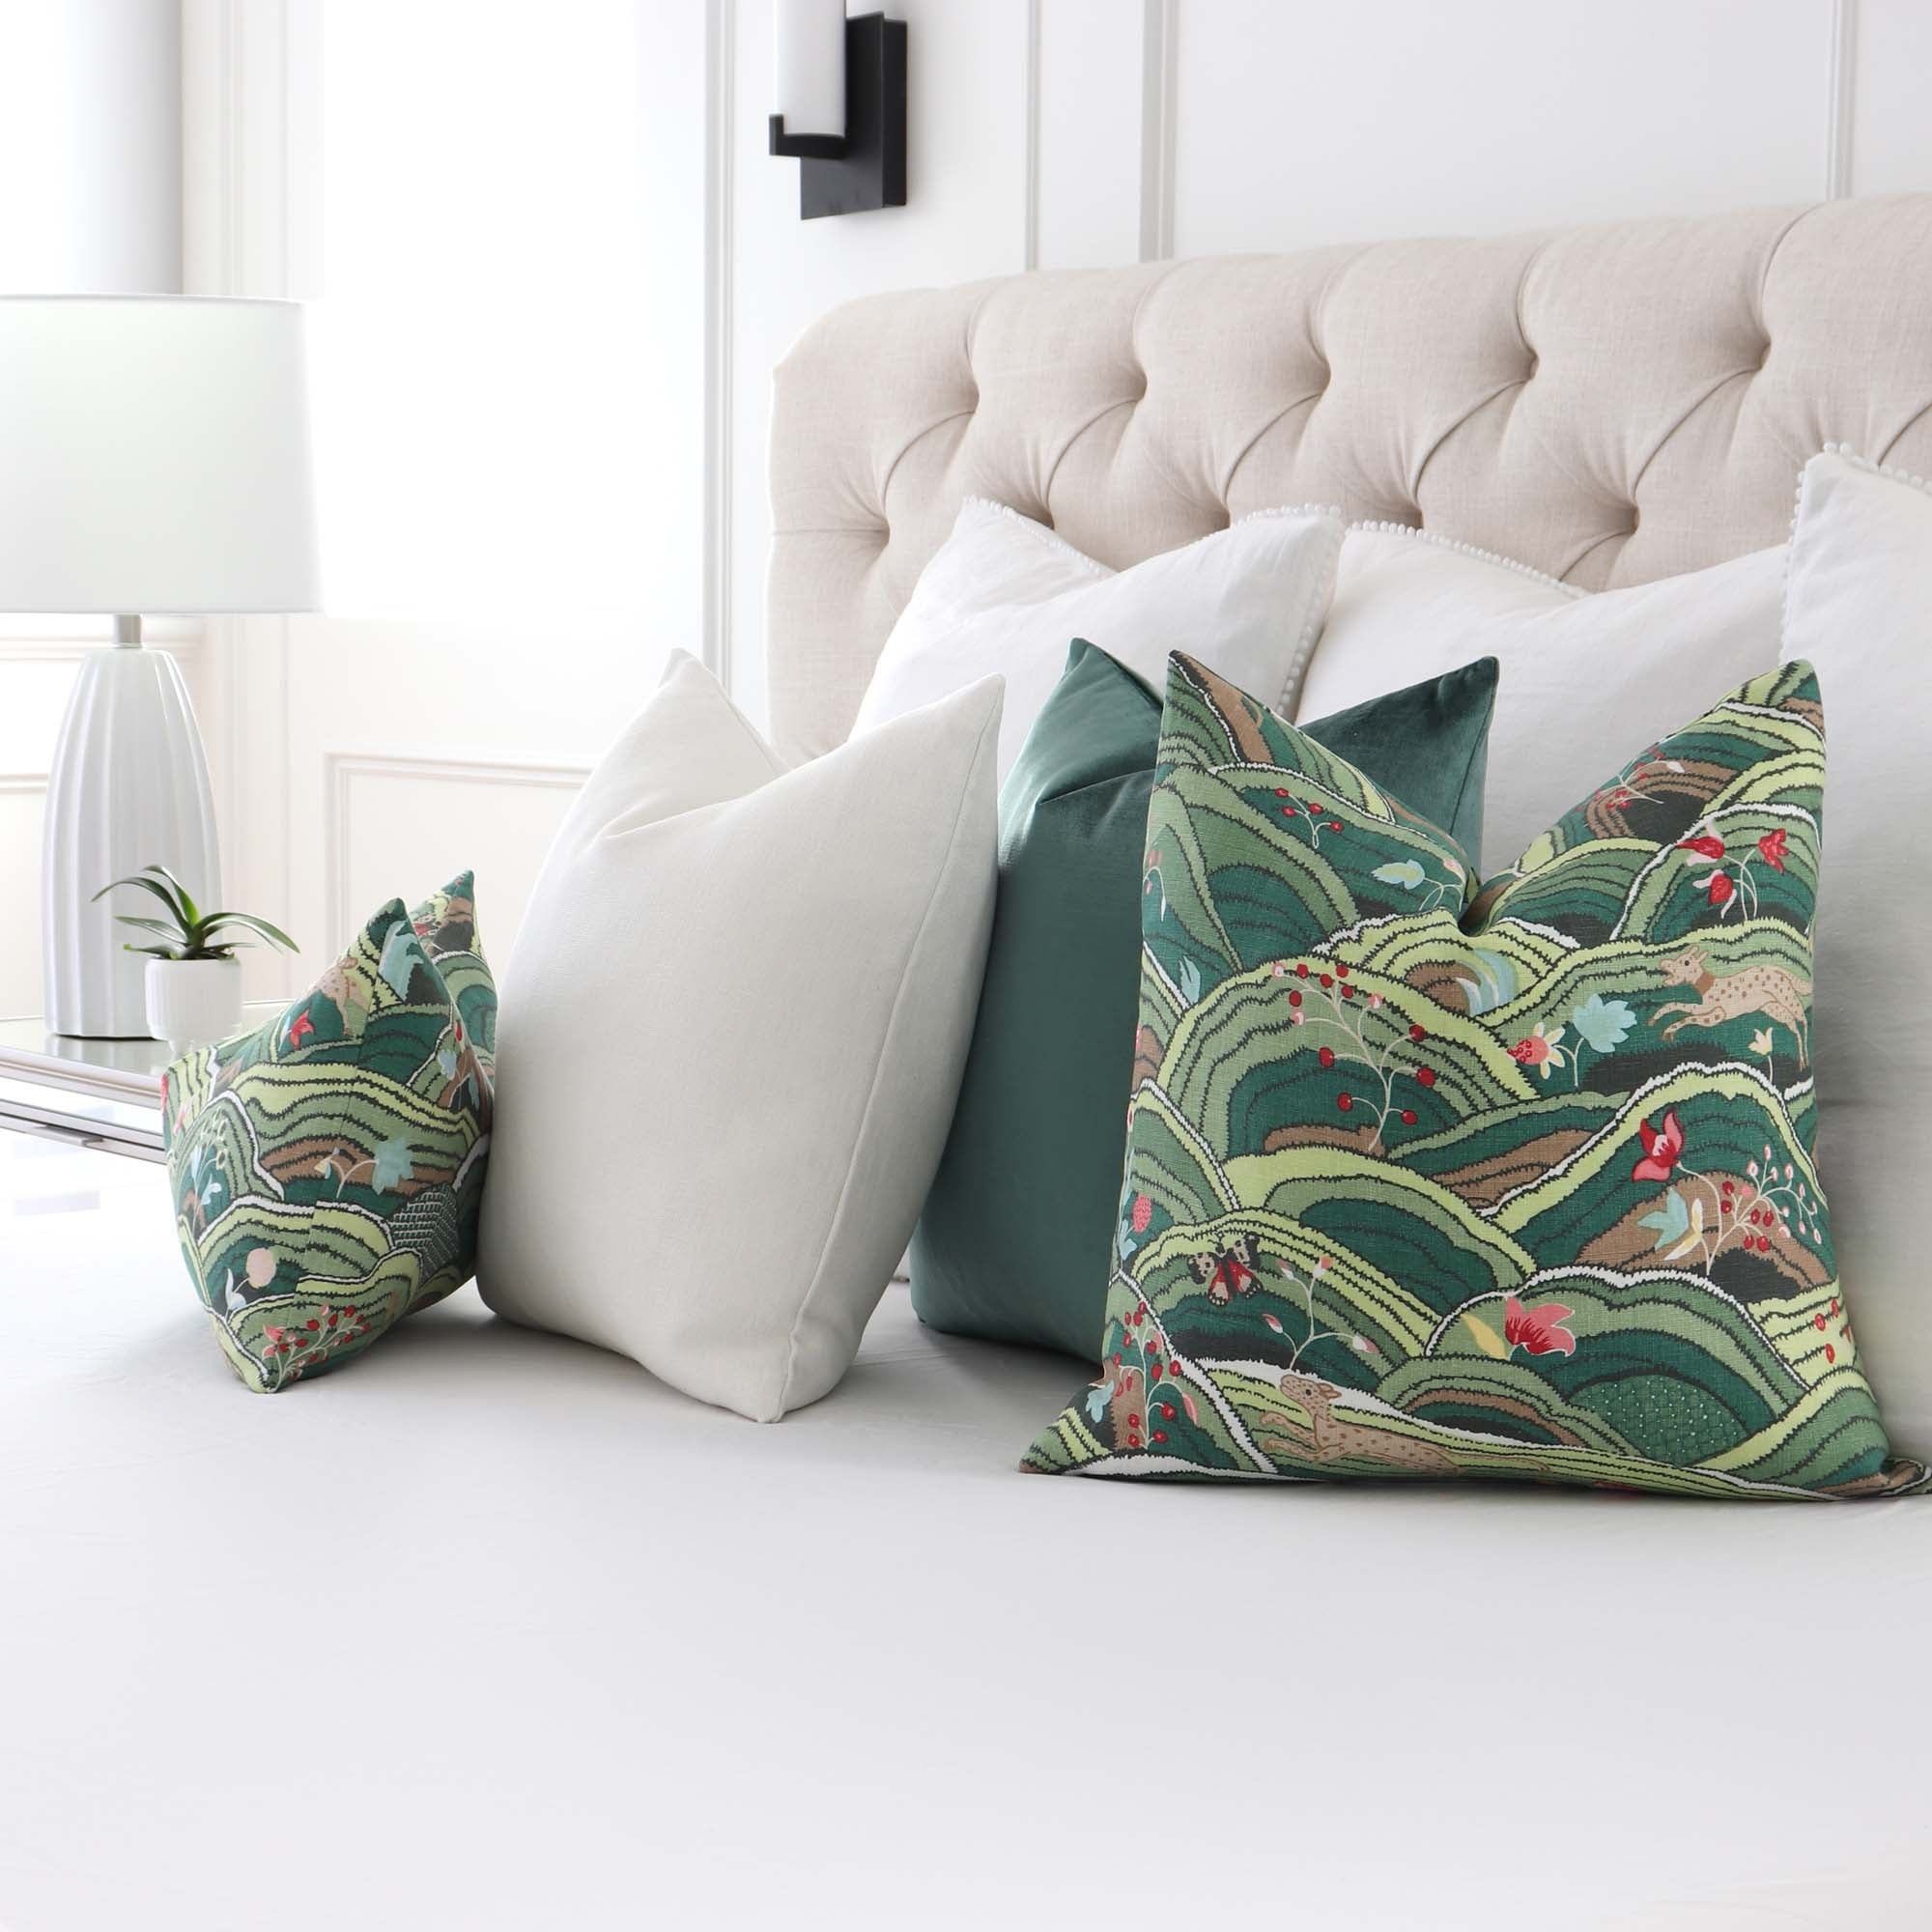 Schumacher Rolling Hills Green Luxury Designer Throw Pillow Cover